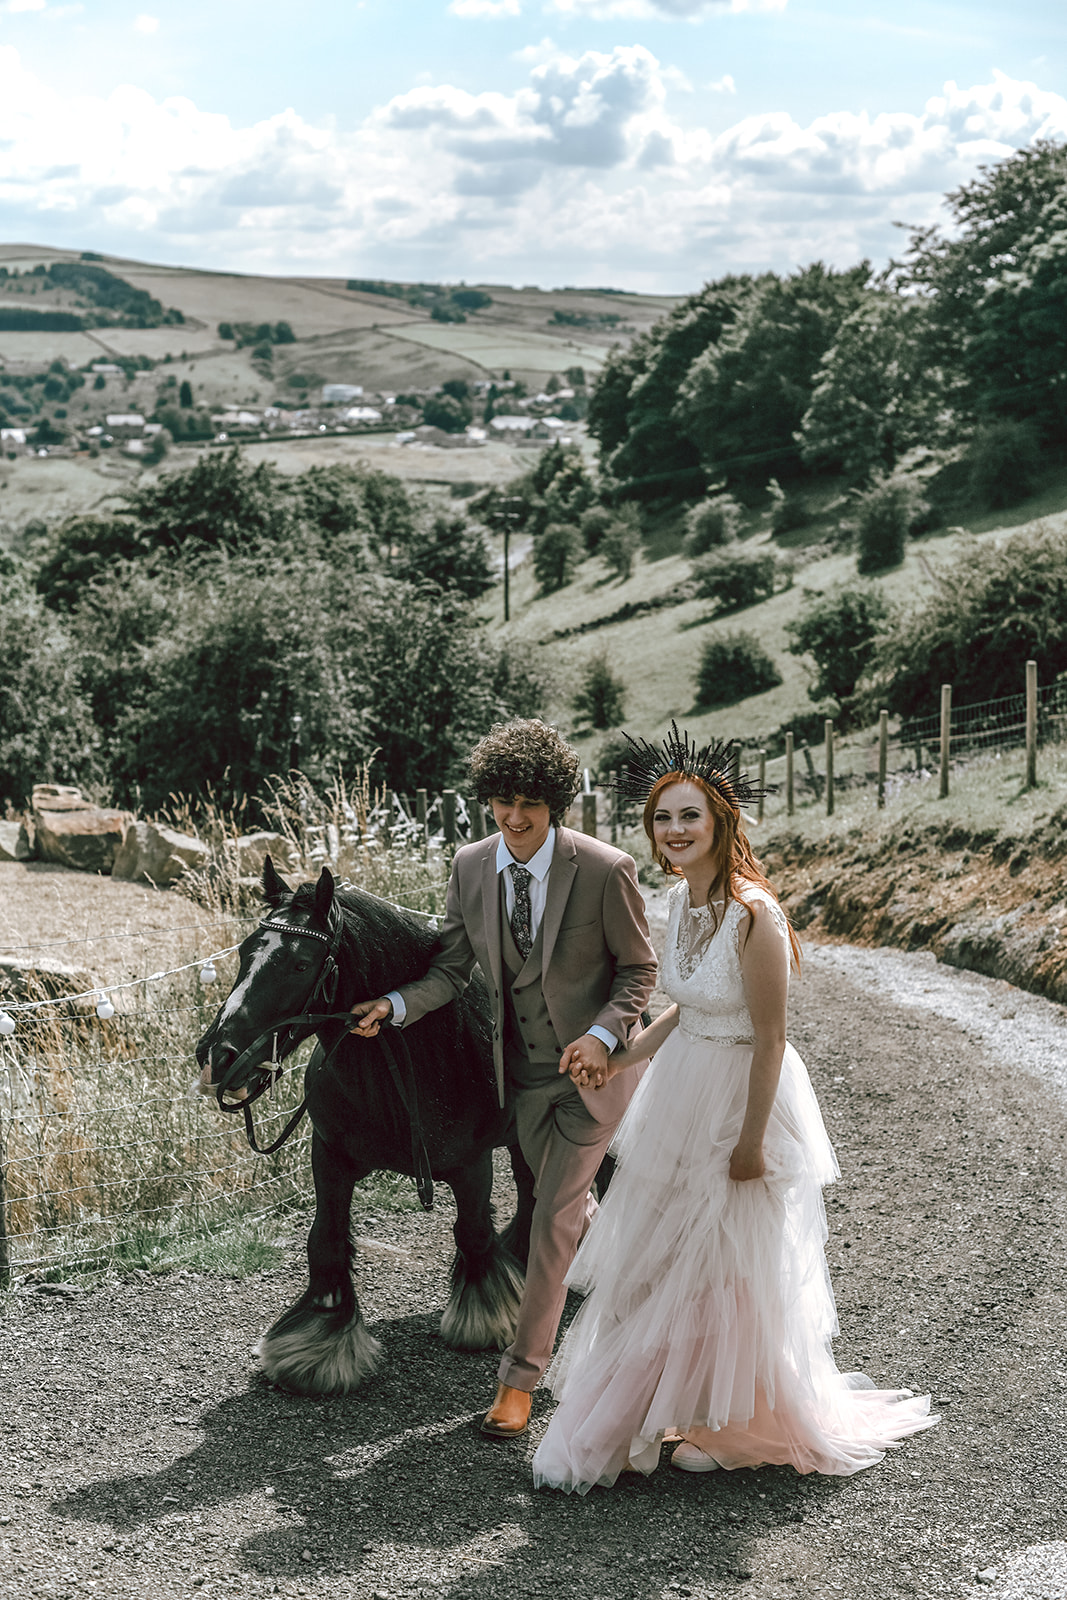 rustic festival wedding - farm wedding - bride and groom with horse